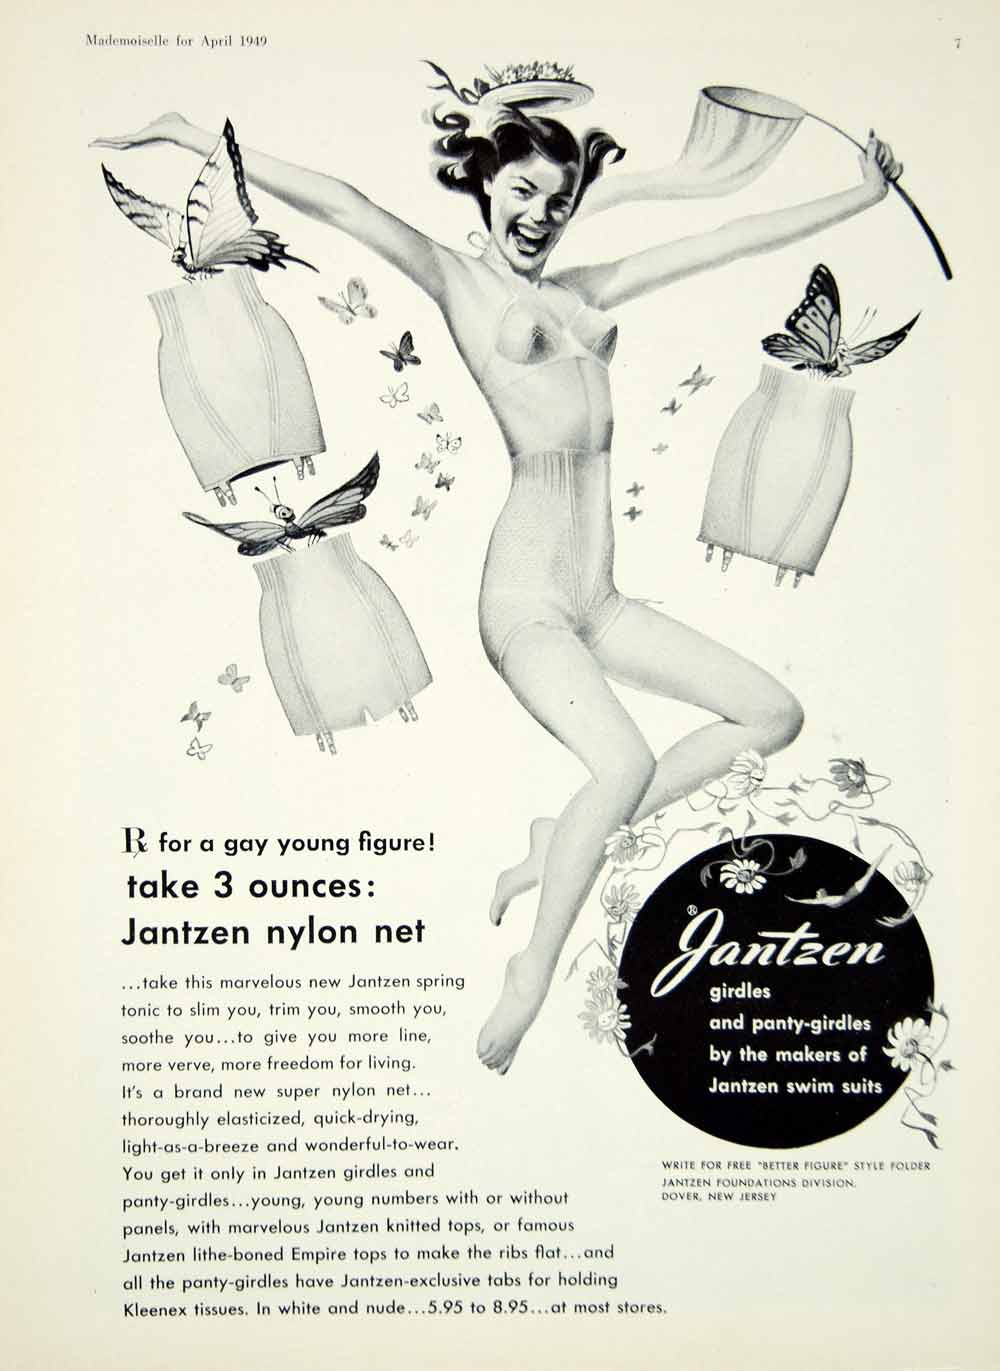 1956 Ad Vintage Warnerette Girdles Warner's Foundation Garment Underwe –  Period Paper Historic Art LLC